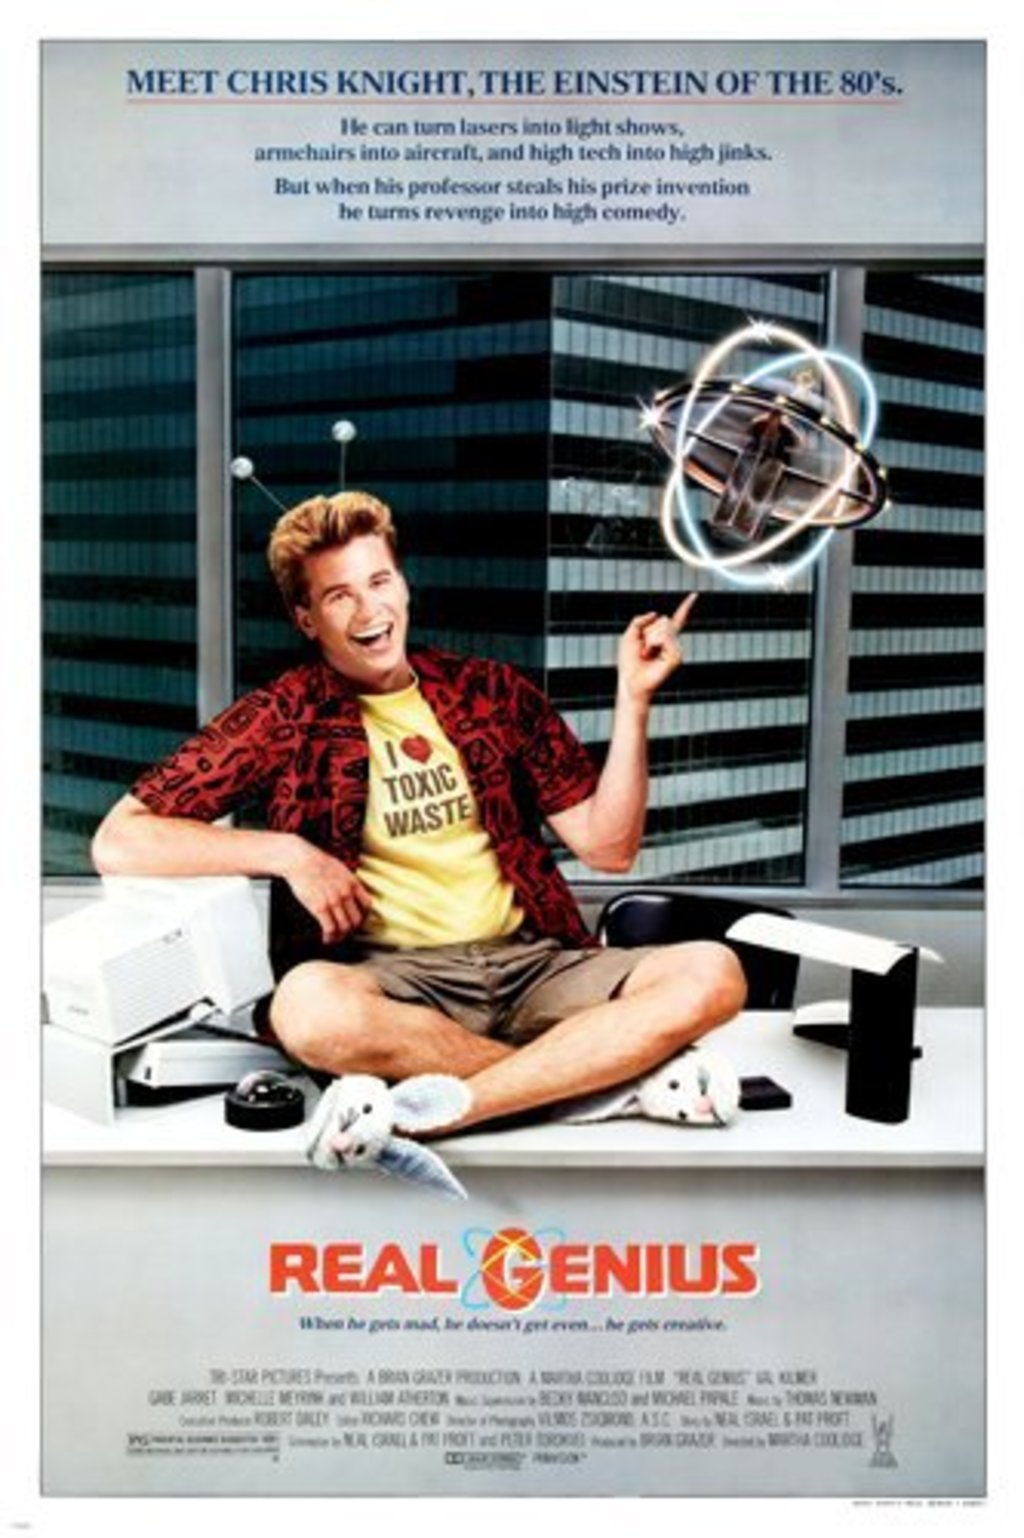 Watch Real Genius on Netflix Today! | NetflixMovies.com